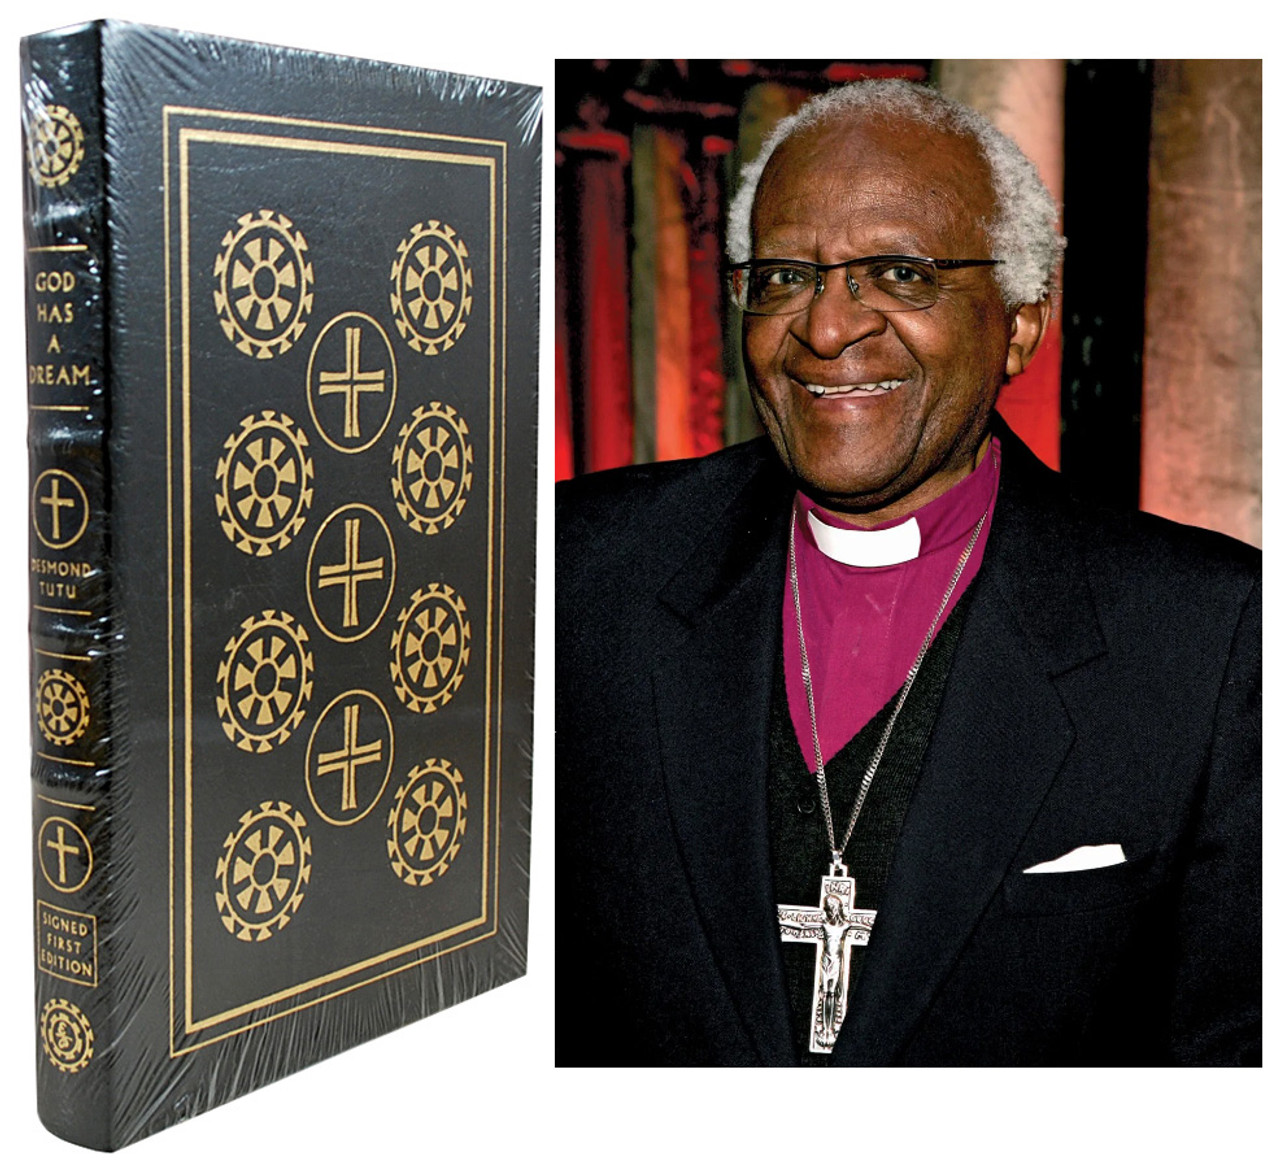 Desmond Tutu "God Has a Dream" Signed First Edition [Sealed]